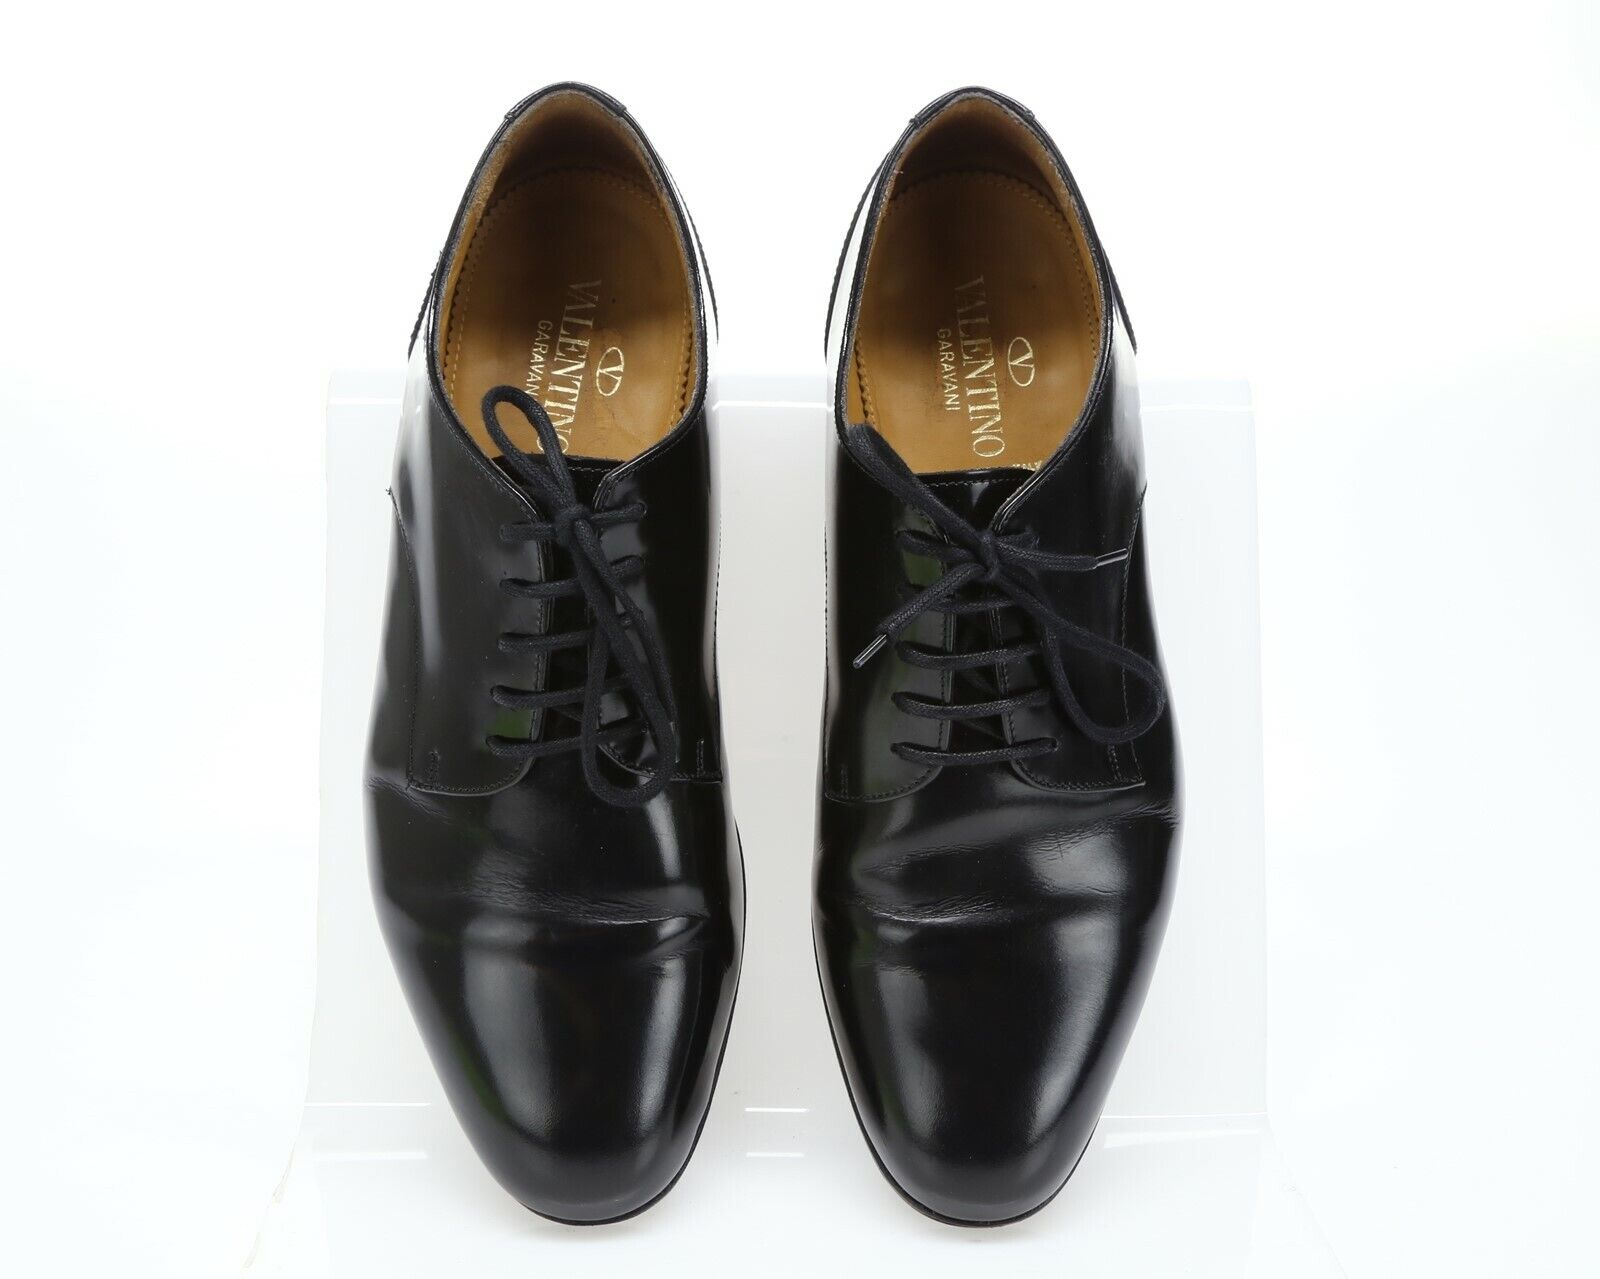 Valentino Garavani Men's black leather oxfords shoes sz. 40 